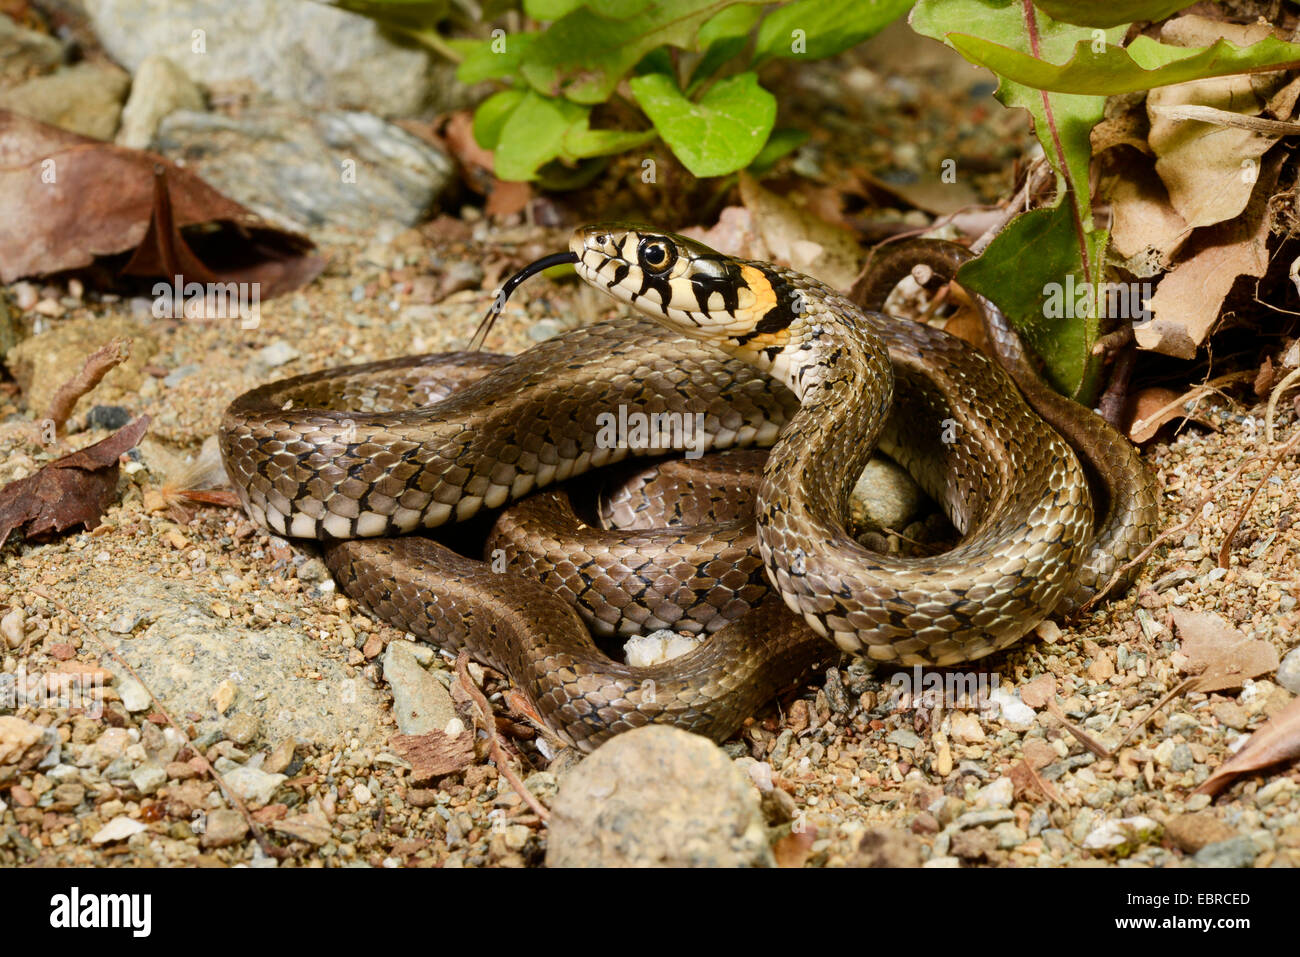 Balkan grass snake (Natrix natrix persa), coiled up grass snake darting tongue in and out, Bulgaria, Biosphaerenreservat Ropotamo Stock Photo